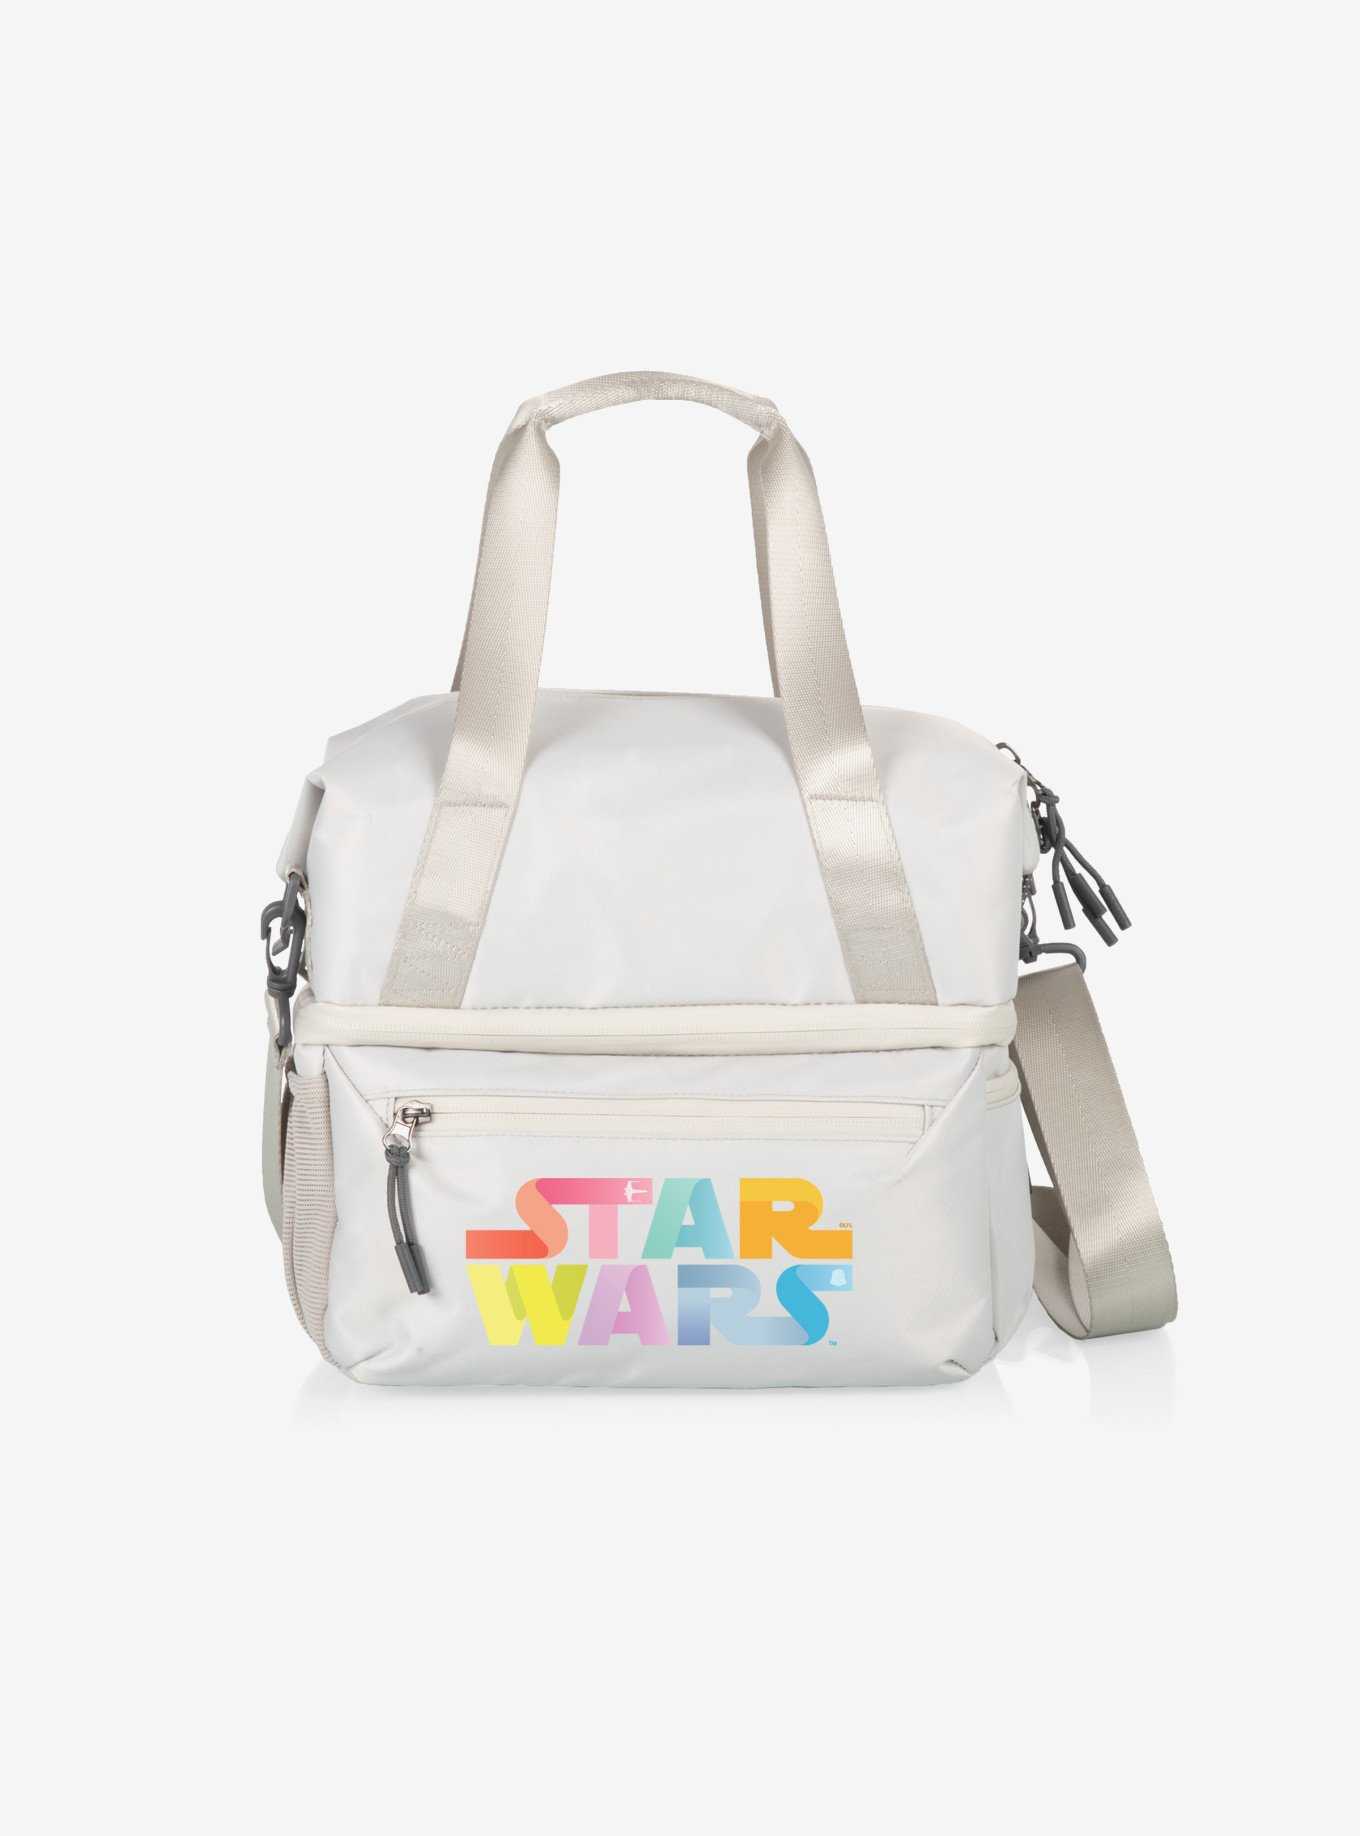 Star Wars Tarana Cooler Lunch Cooler Bag, , hi-res